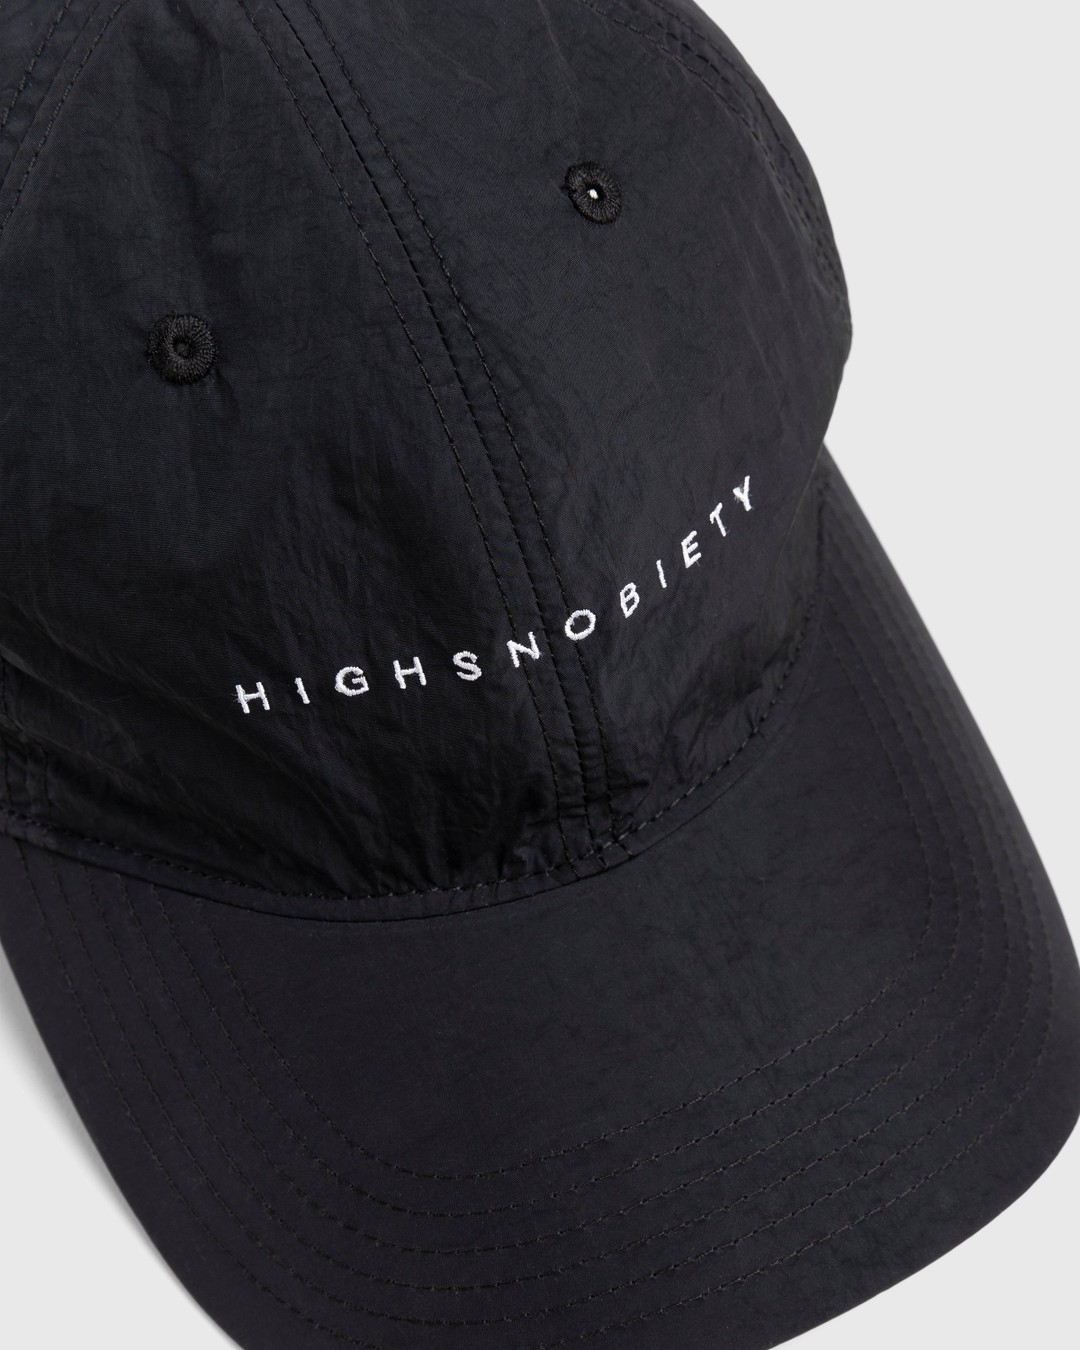 Highsnobiety – Nylon Ball Cap Black - Caps - Black - Image 5